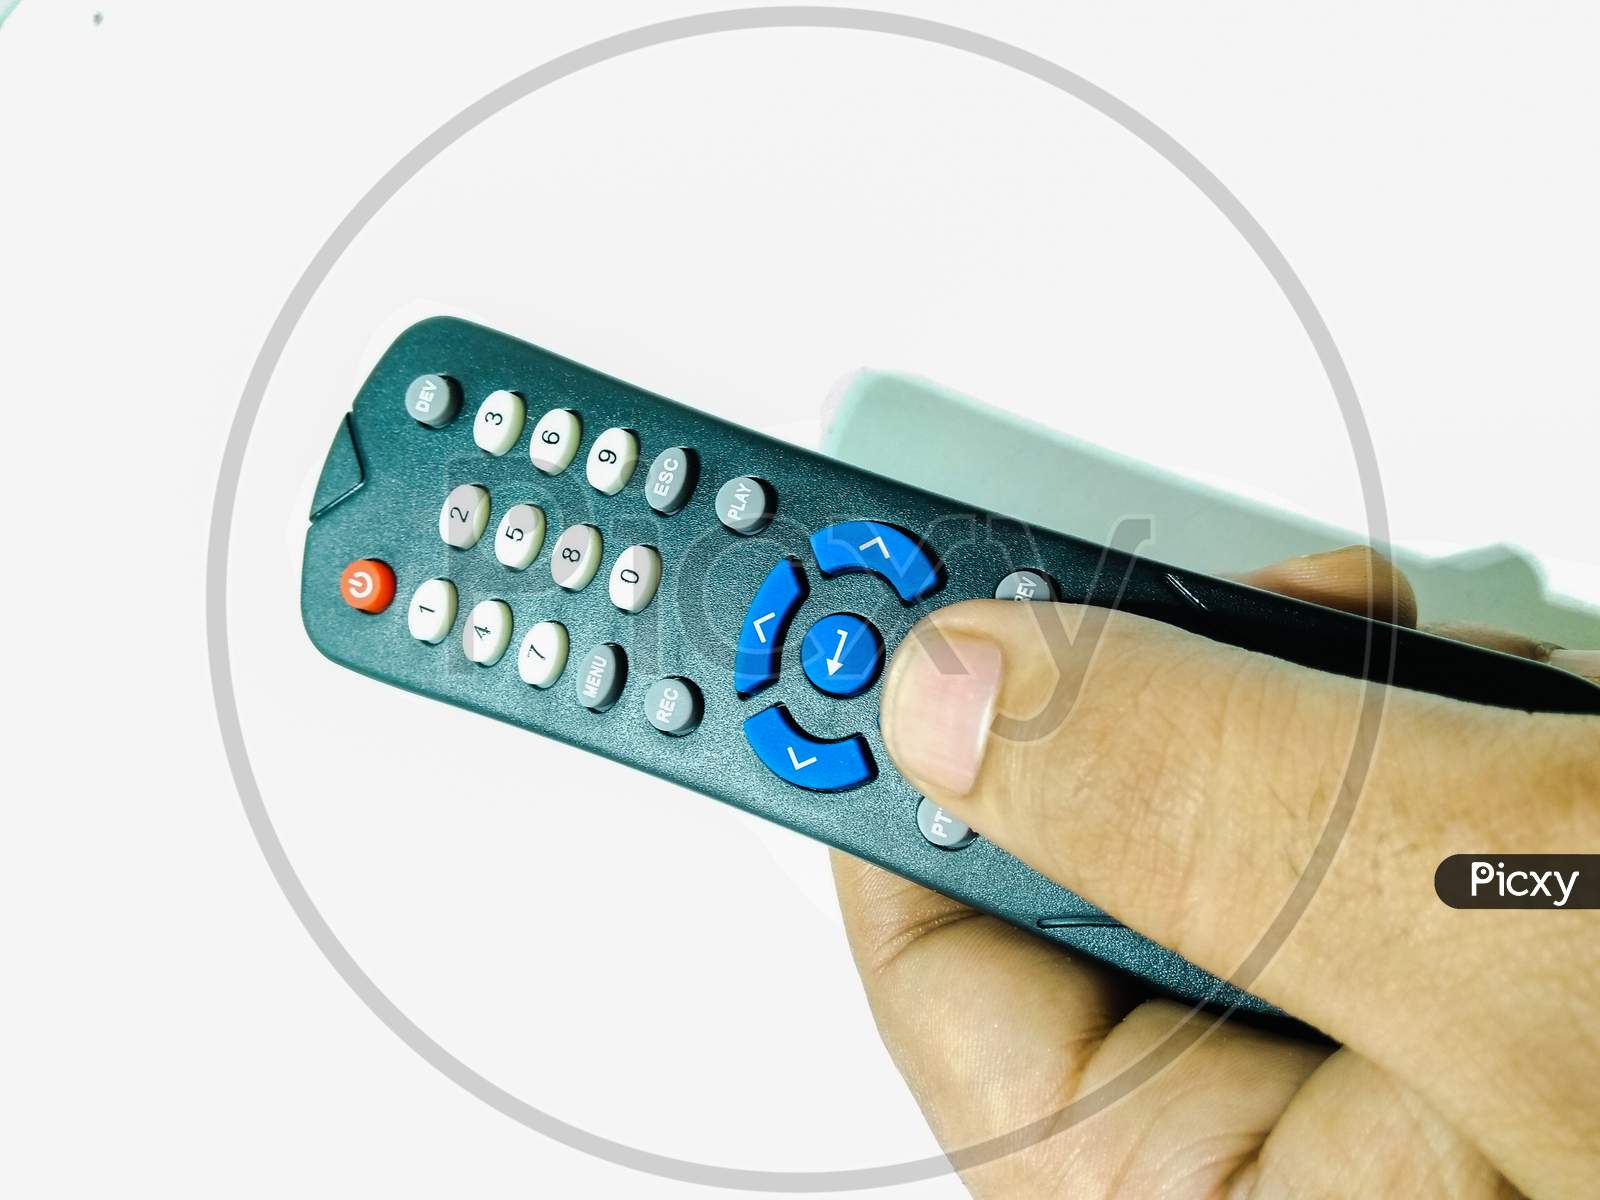 A picture of remote